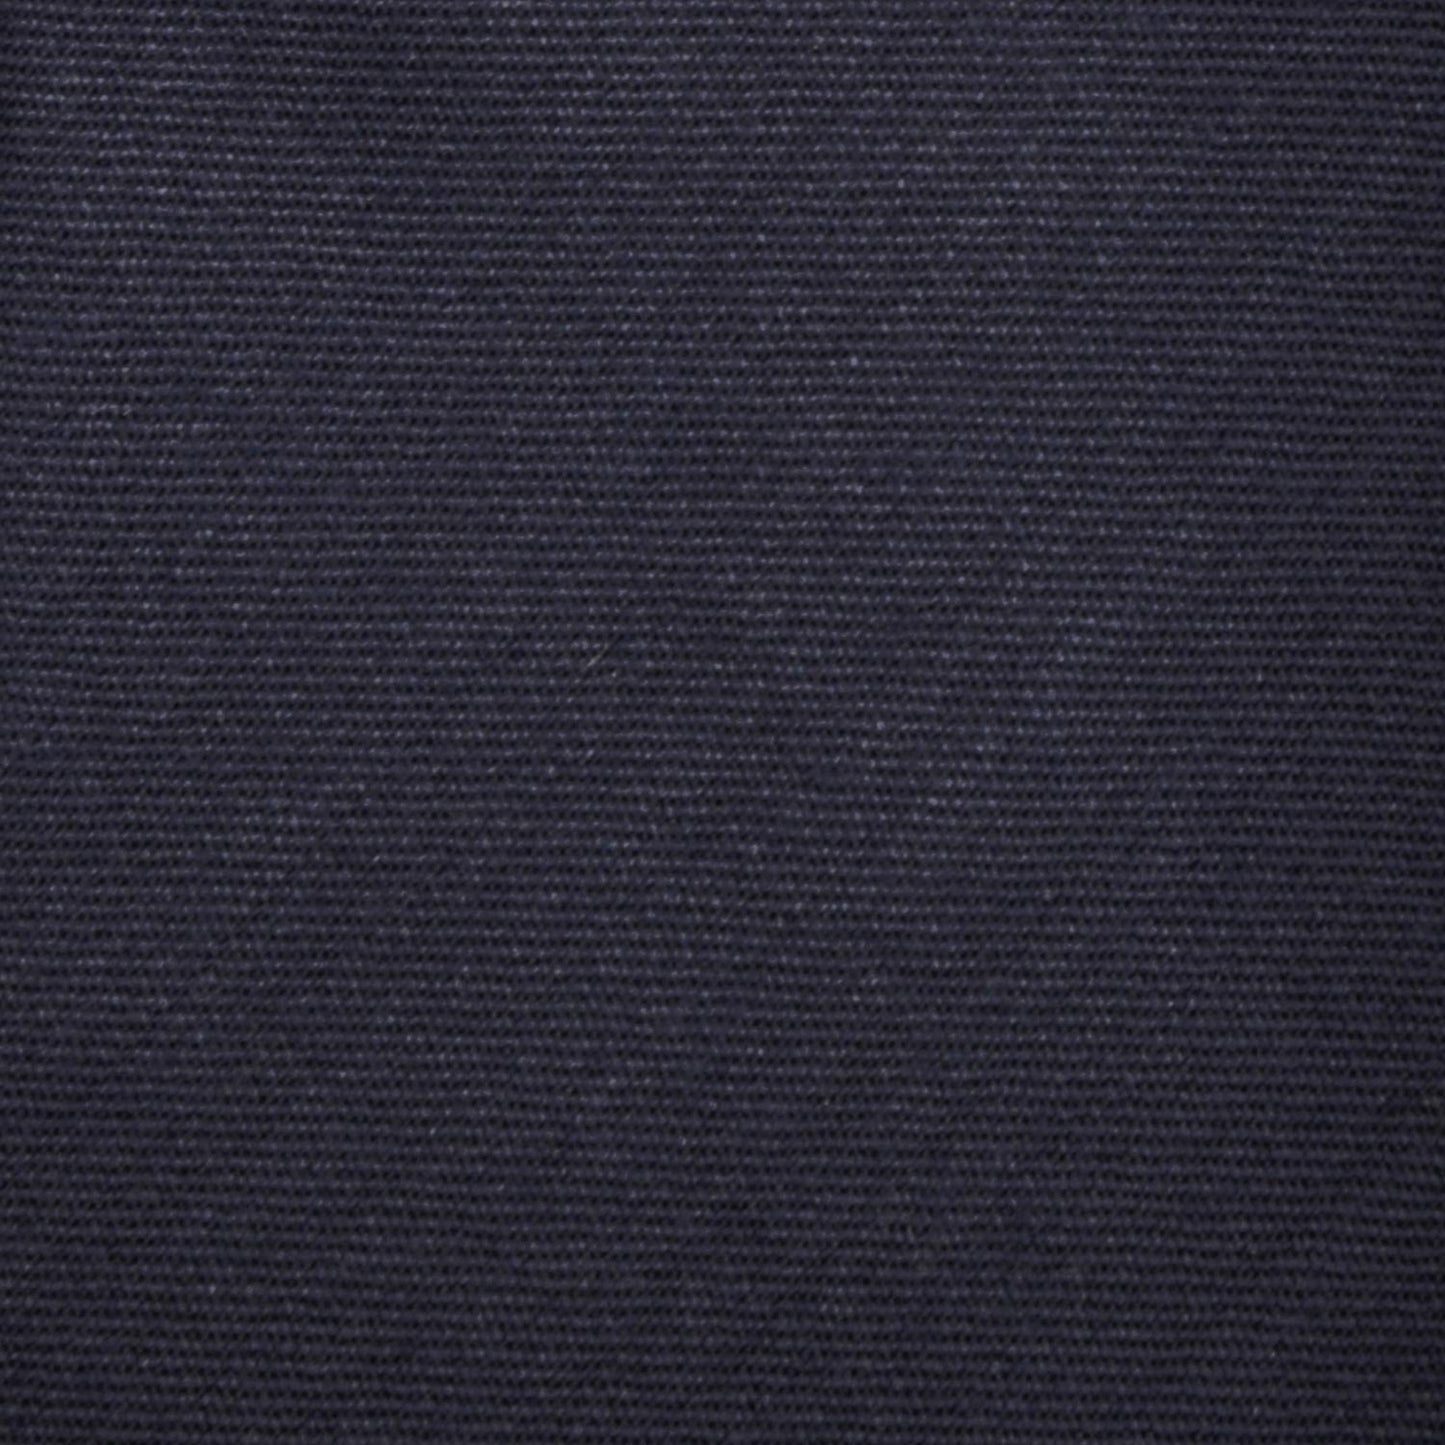 F.Marino Wool Tie 3 Folds Blue-Wools Boutique Uomo